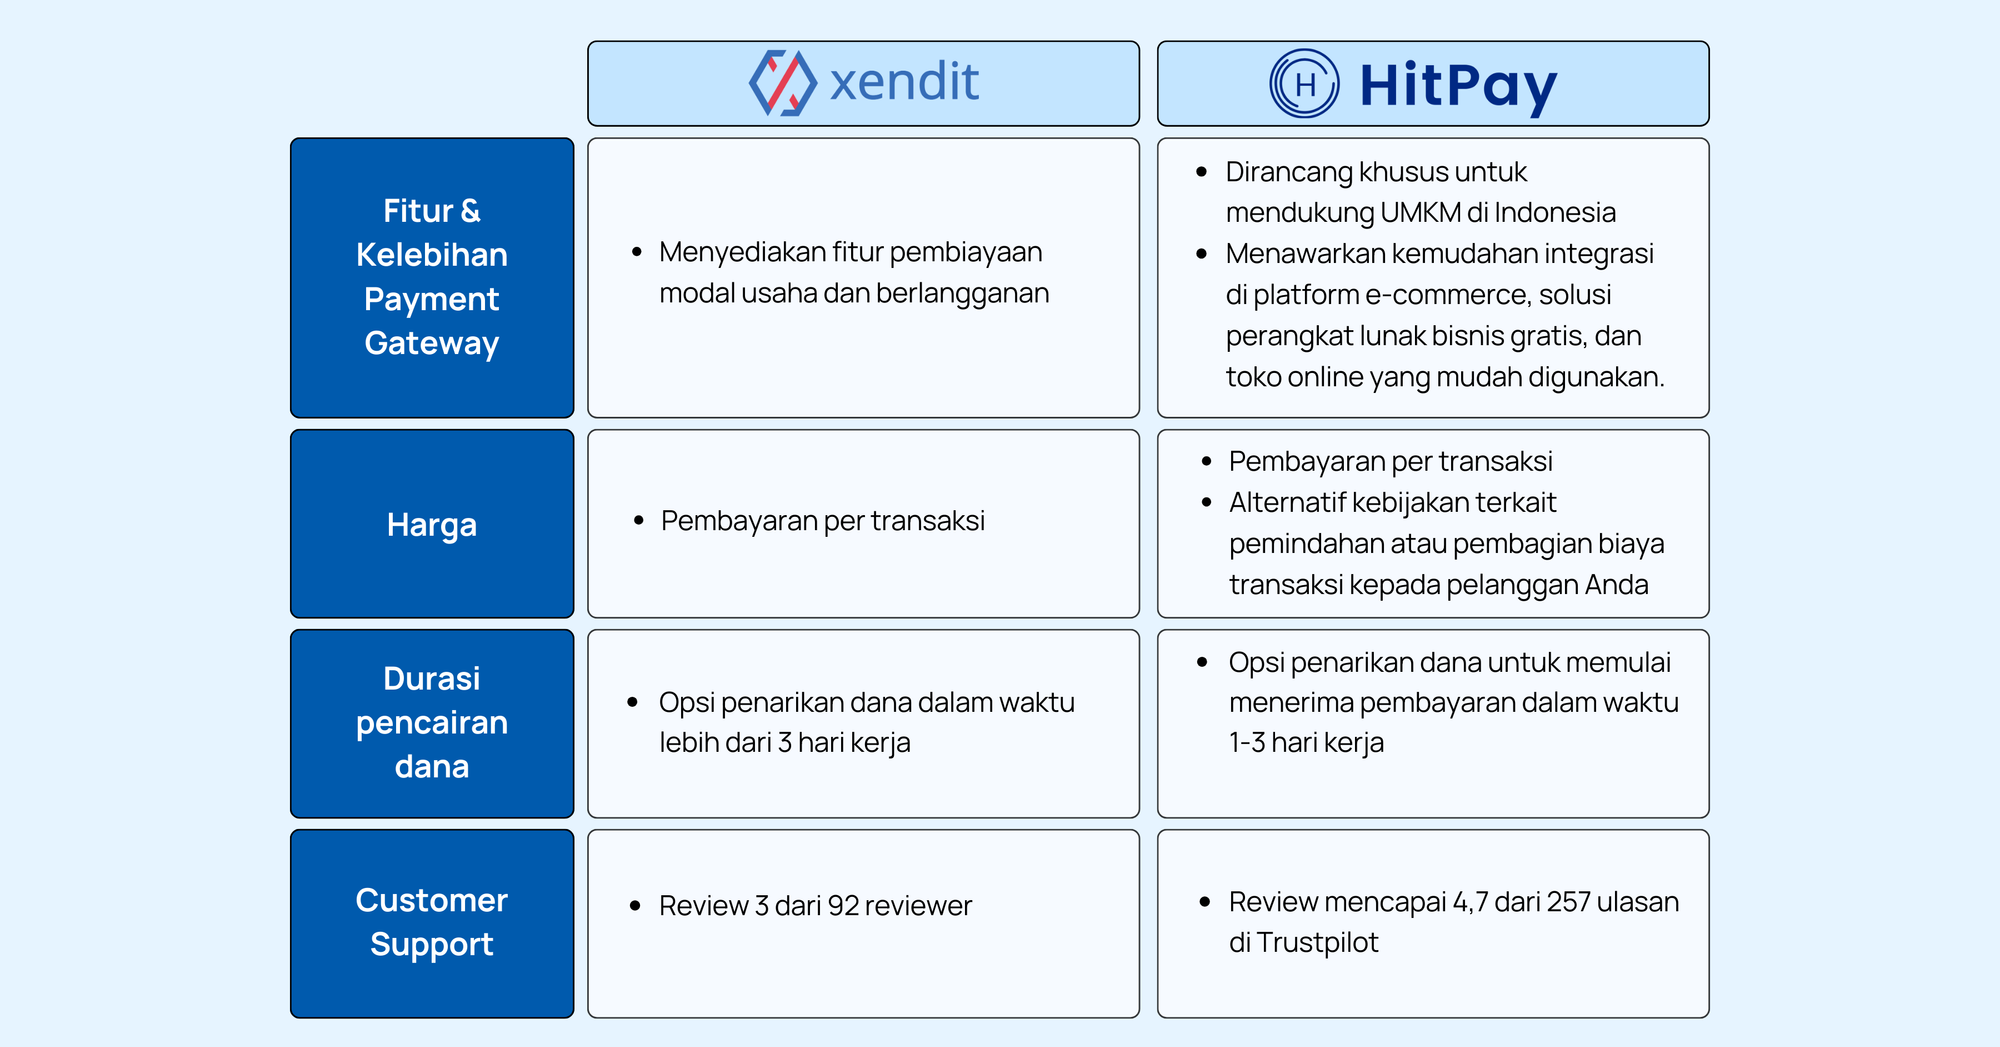 HitPay: Alternatif Payment Gateway Xendit Untuk UMKM di Indonesia